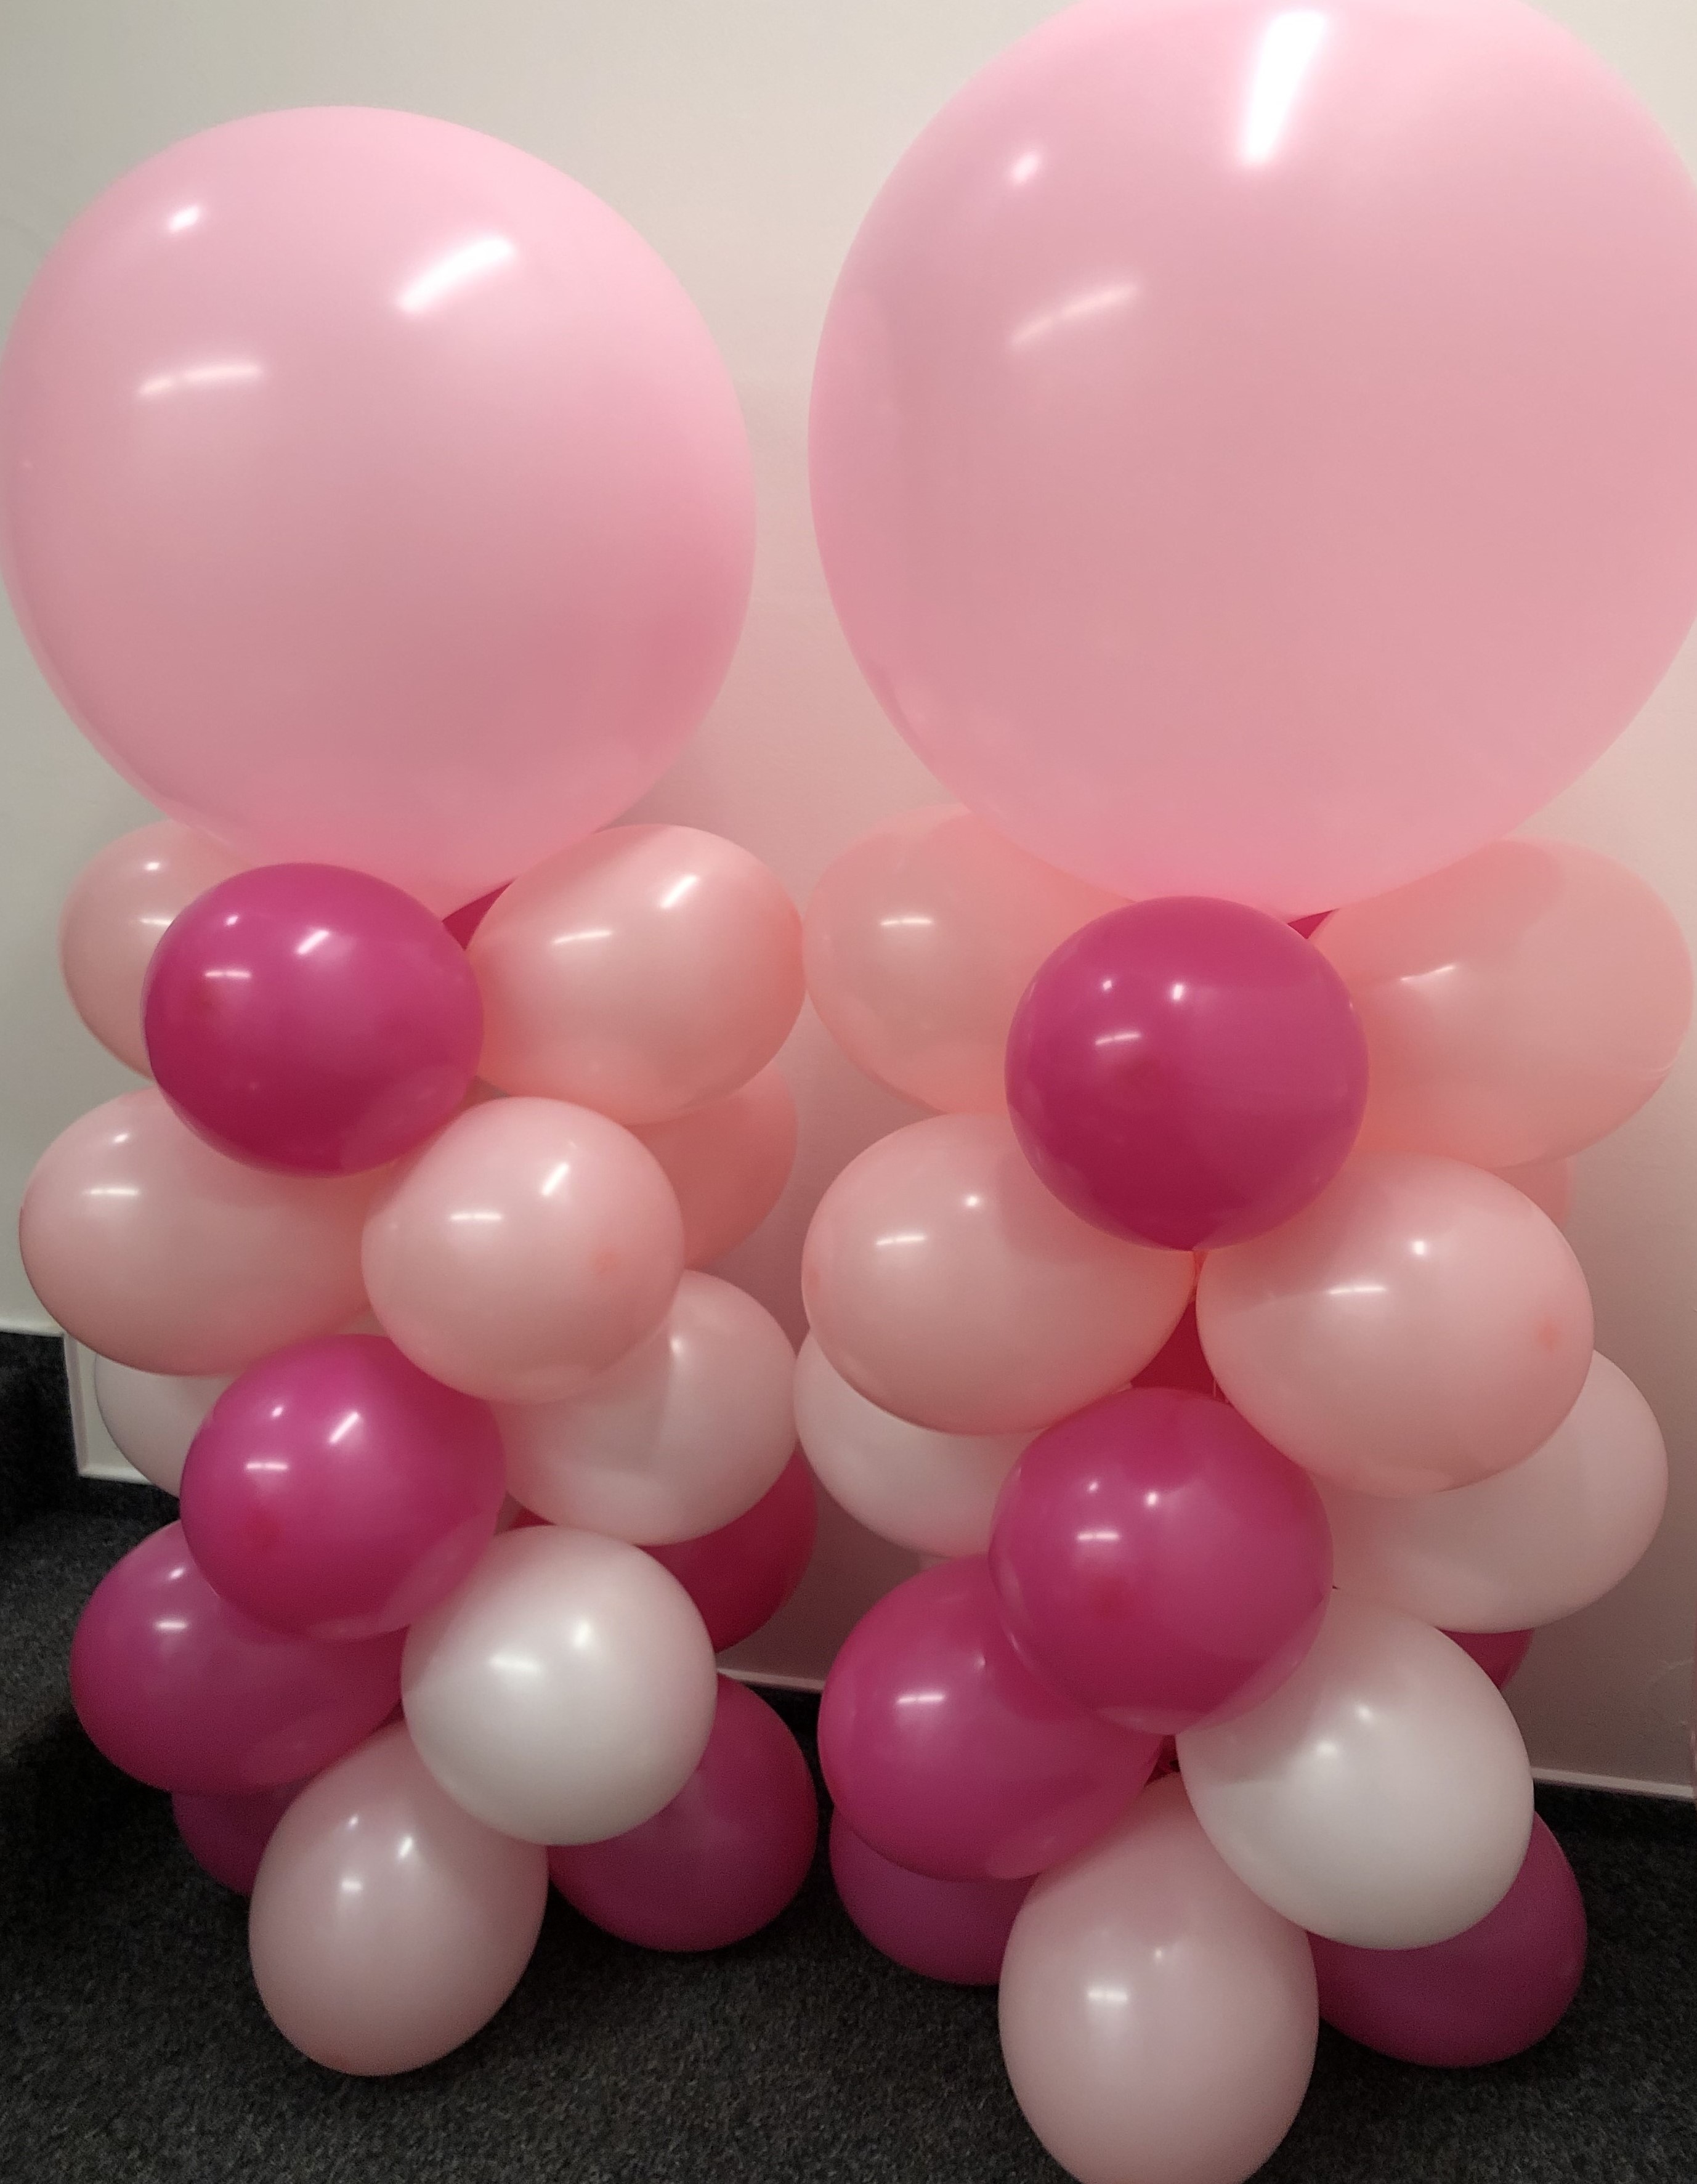 Balónek tmavě růžový 